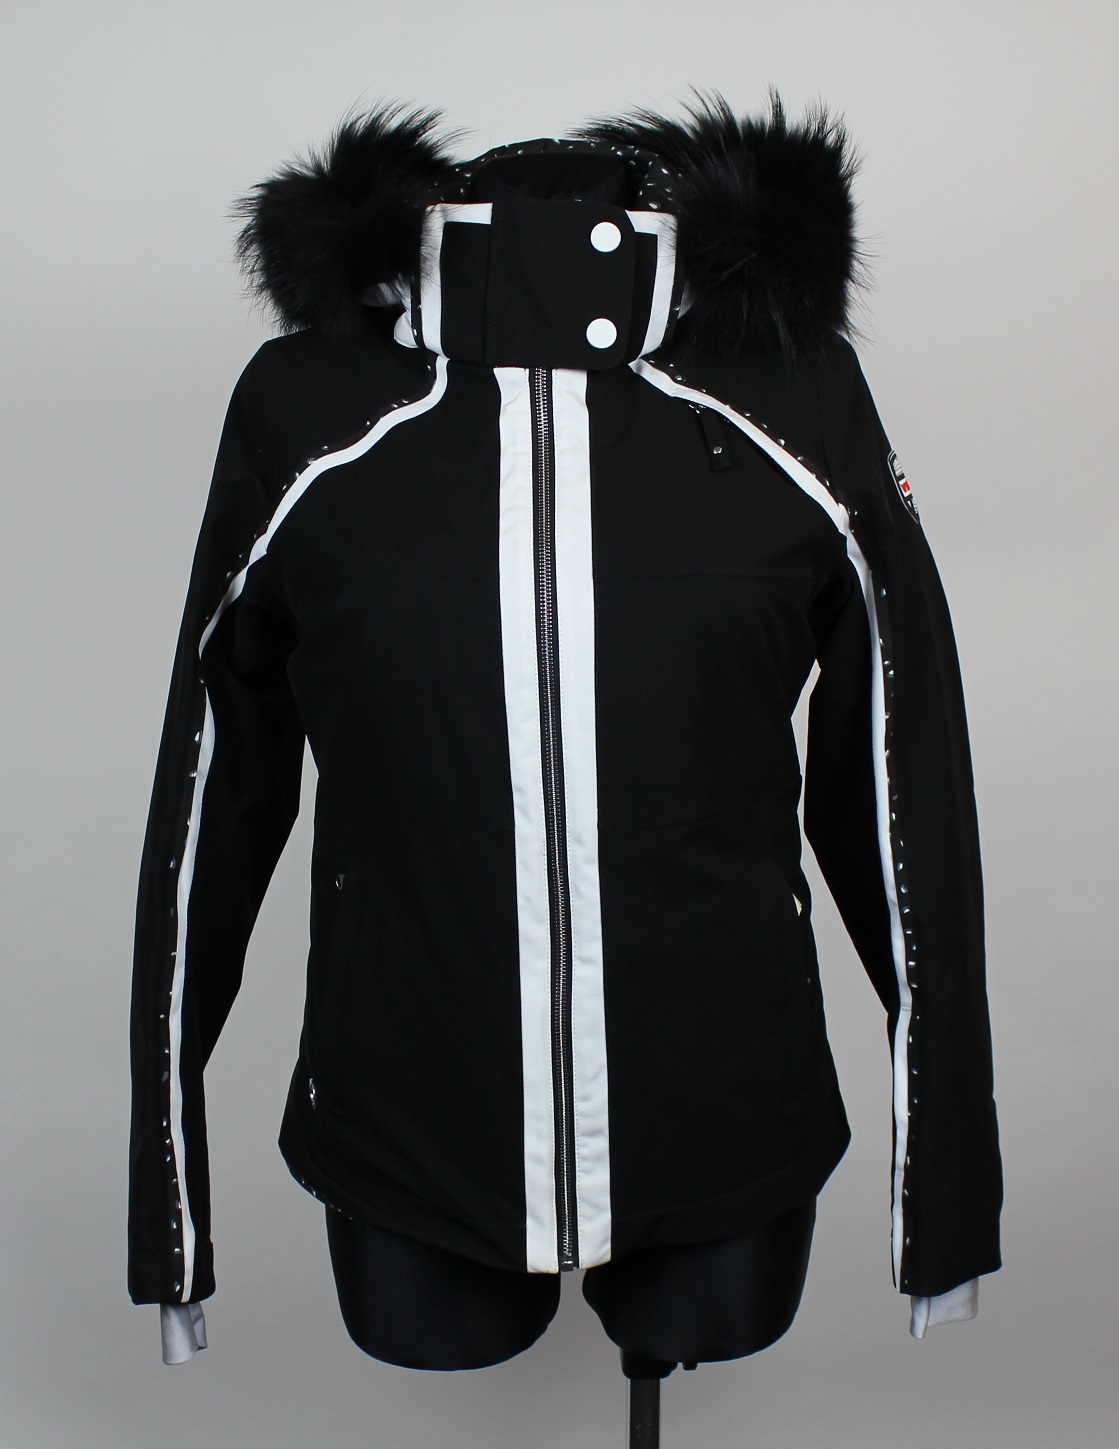 Vist Antea Leopard Insulated Ski Jacket